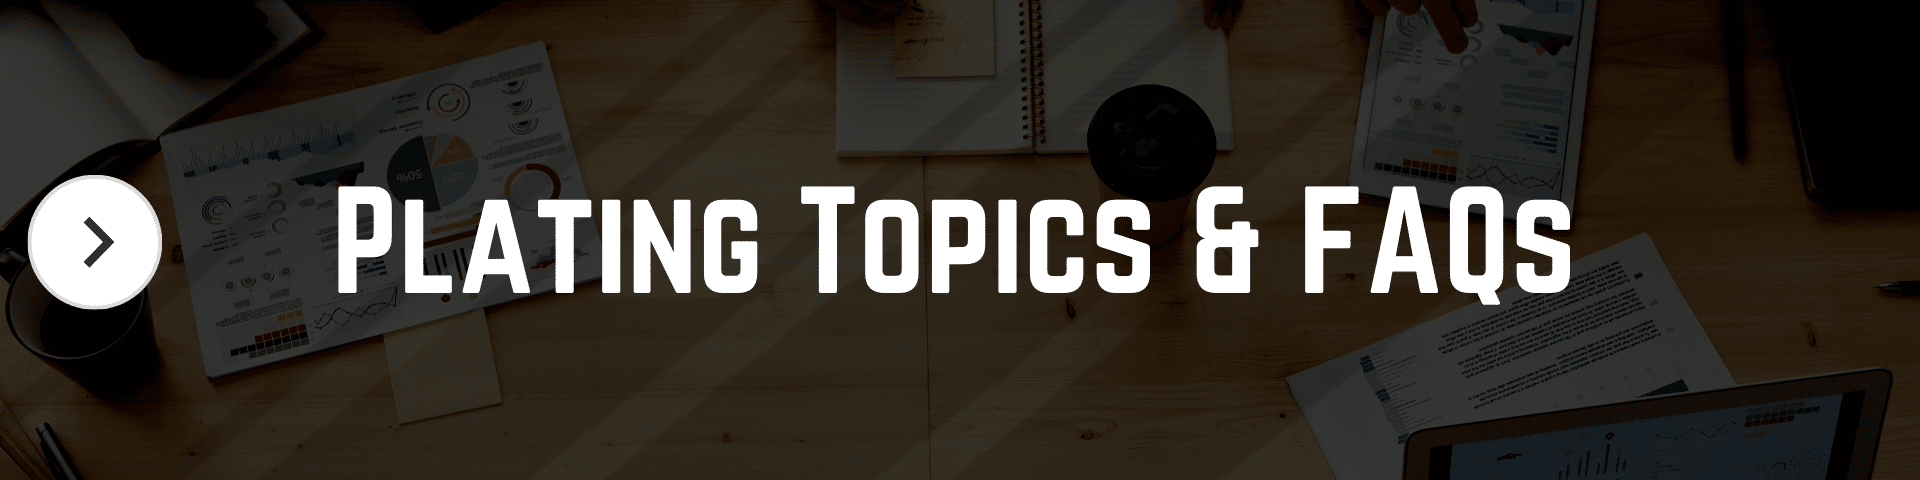 Plating Topics & FAQs